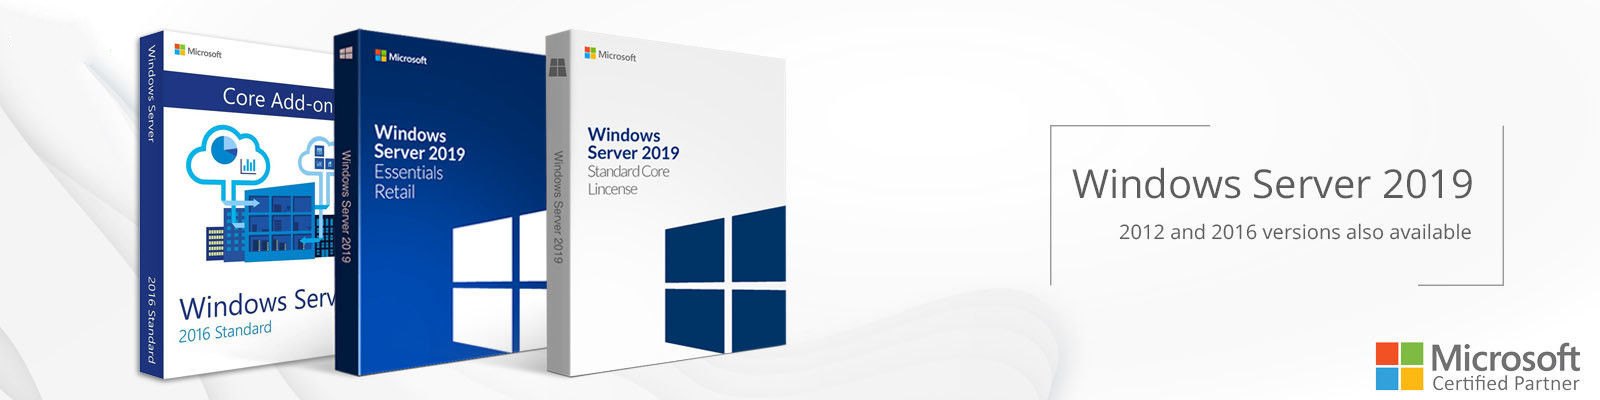 Cina terbaik Kunci Lisensi Microsoft Windows 10 penjualan